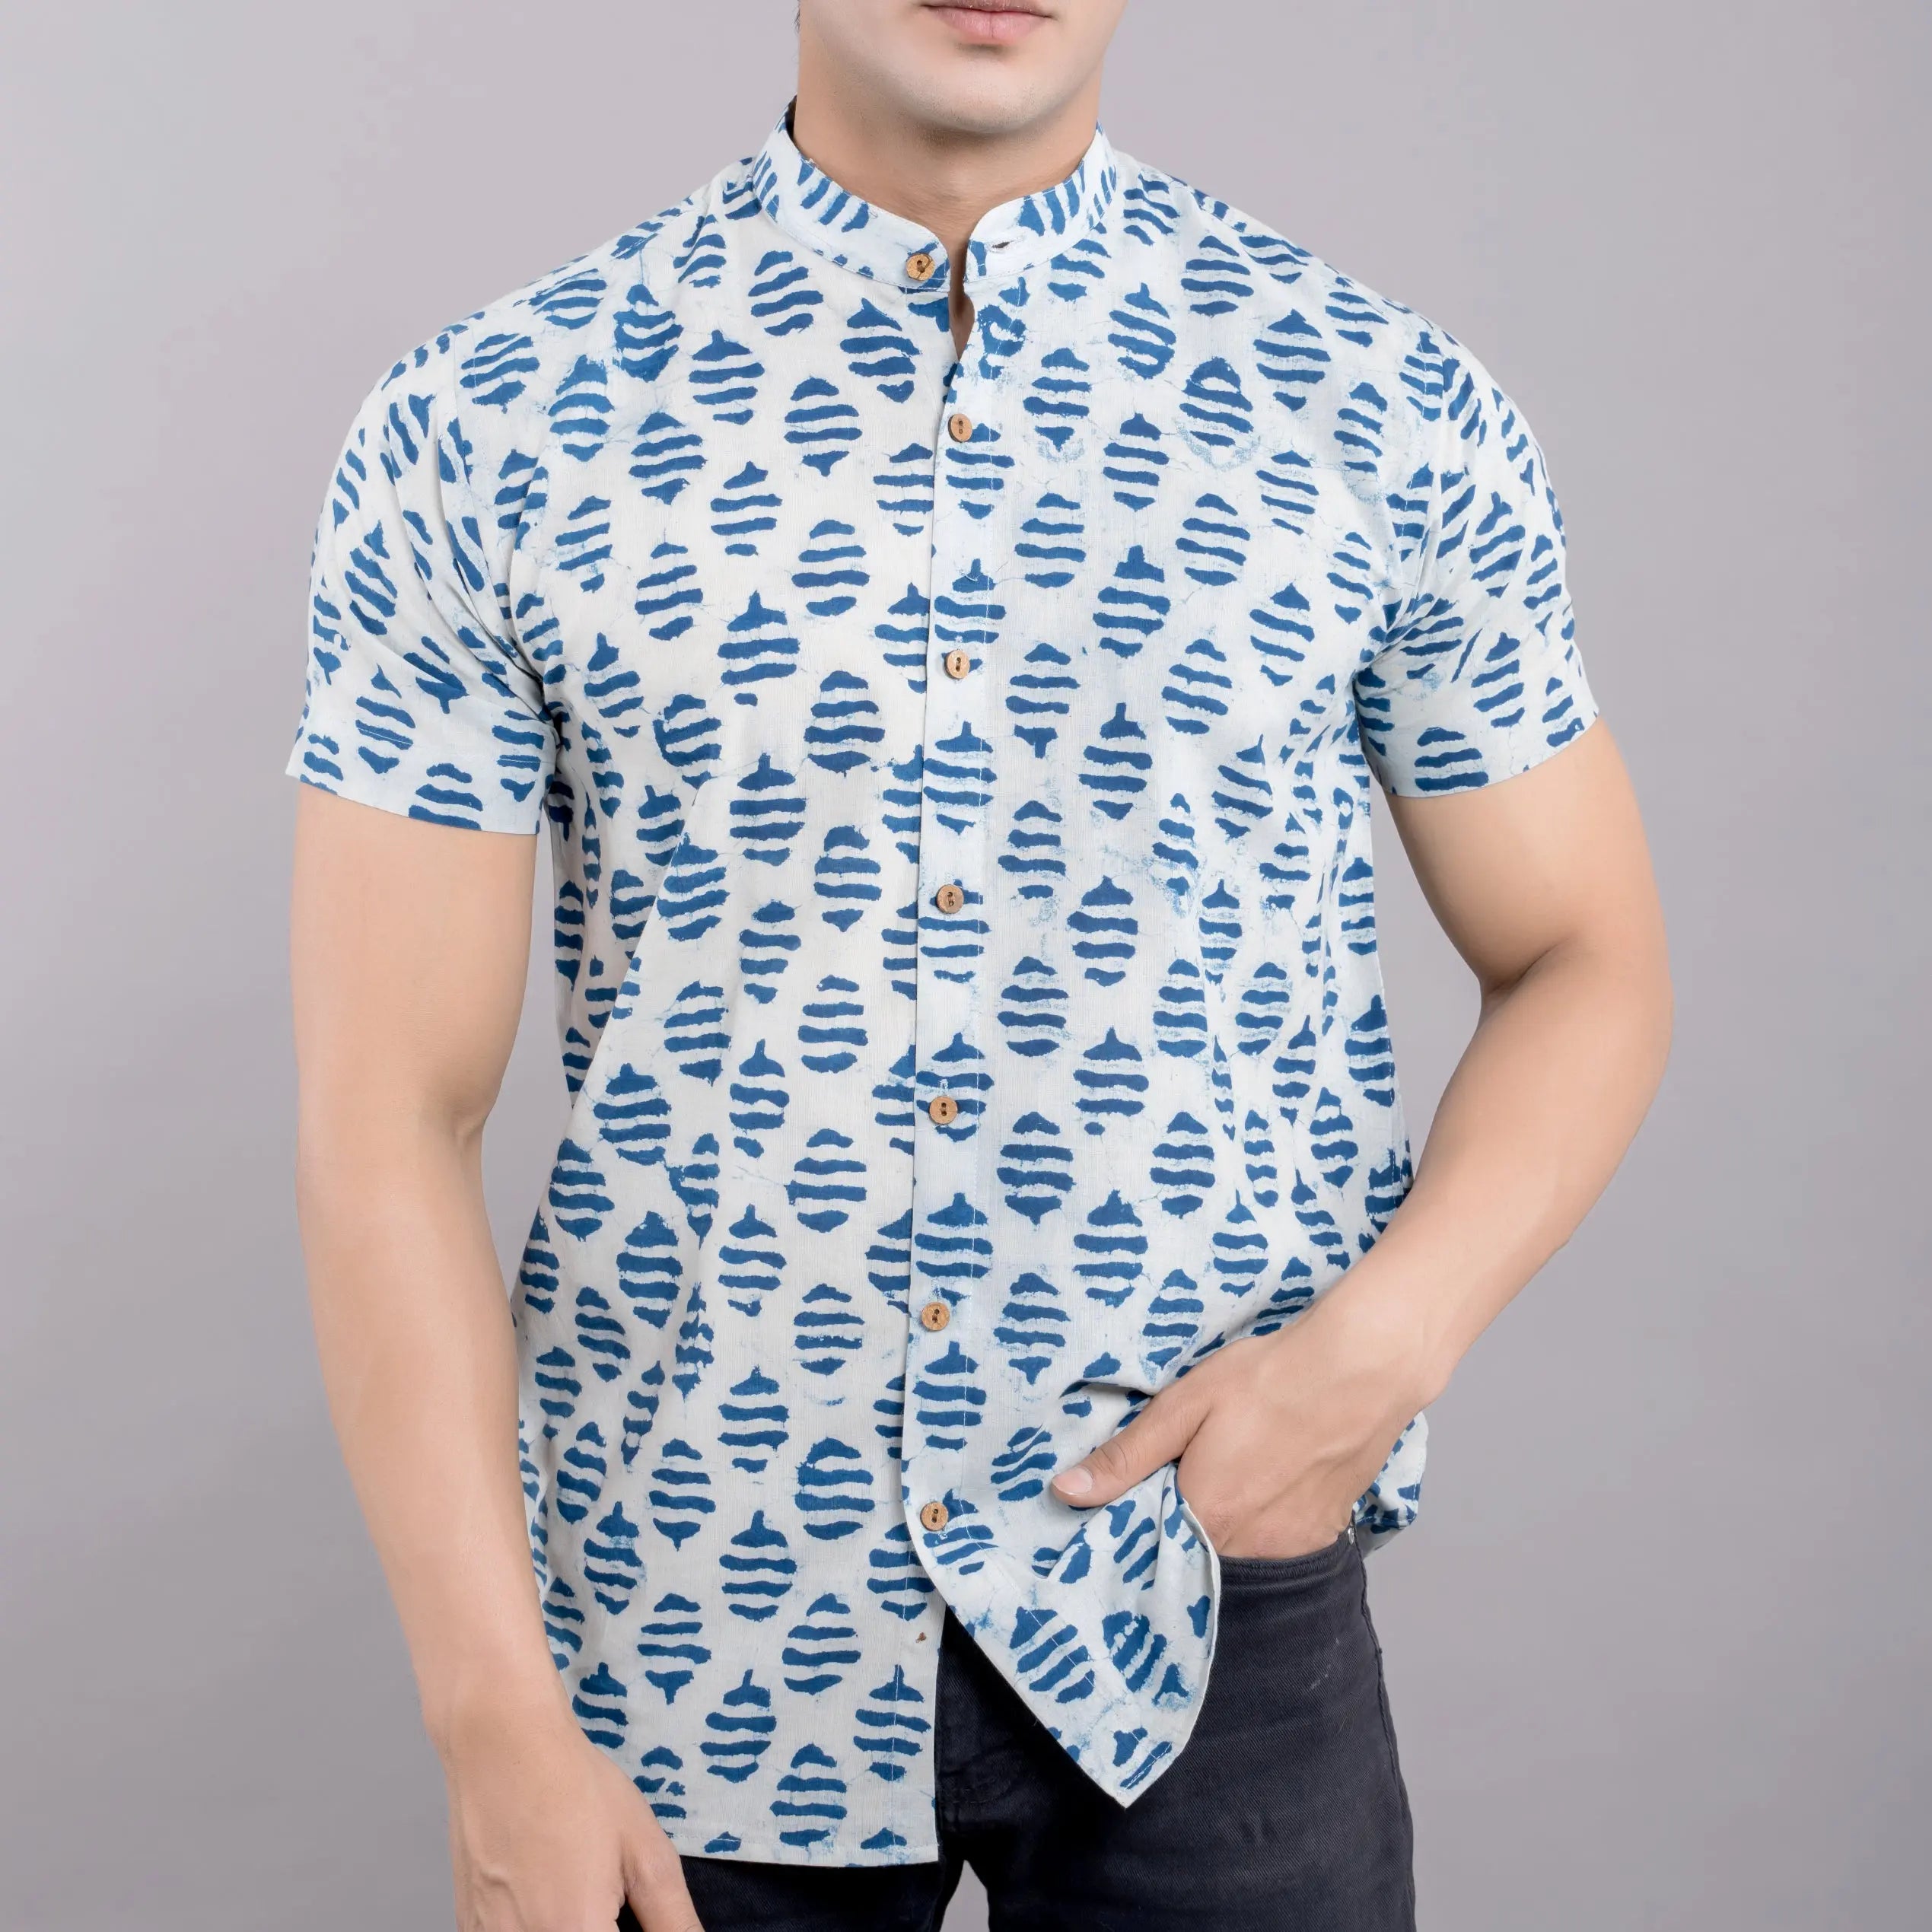 Firangi Yarn Handblock Printed Shirt Indigo White Shirt For Men 100% Cotton